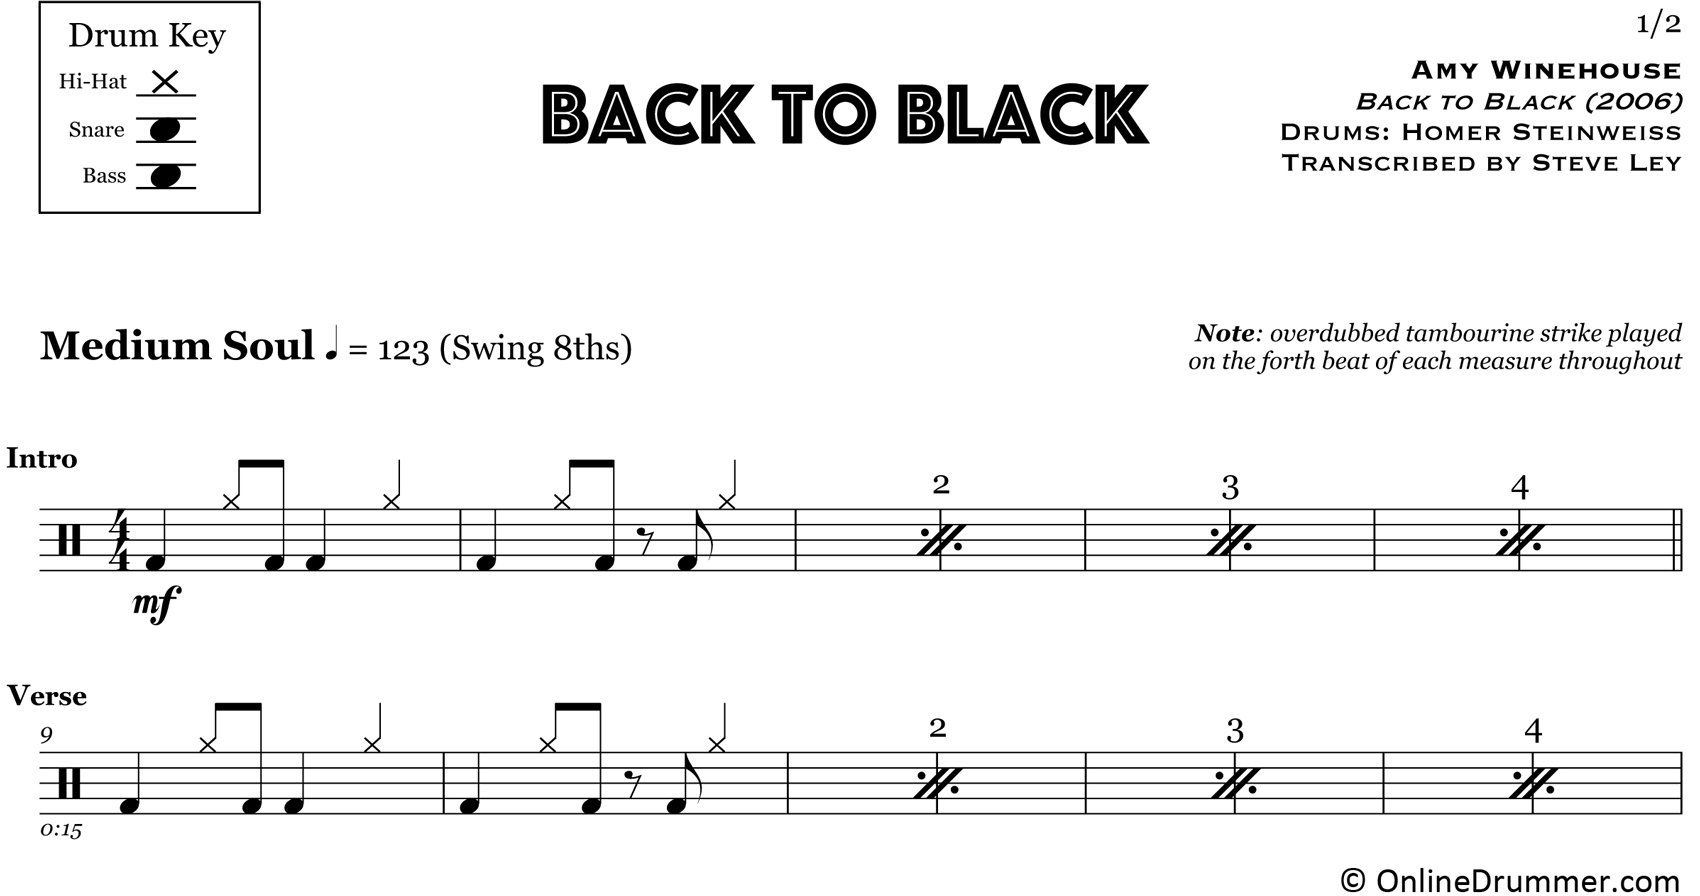 Back To Black - Amy Winehouse - Drum Sheet Music